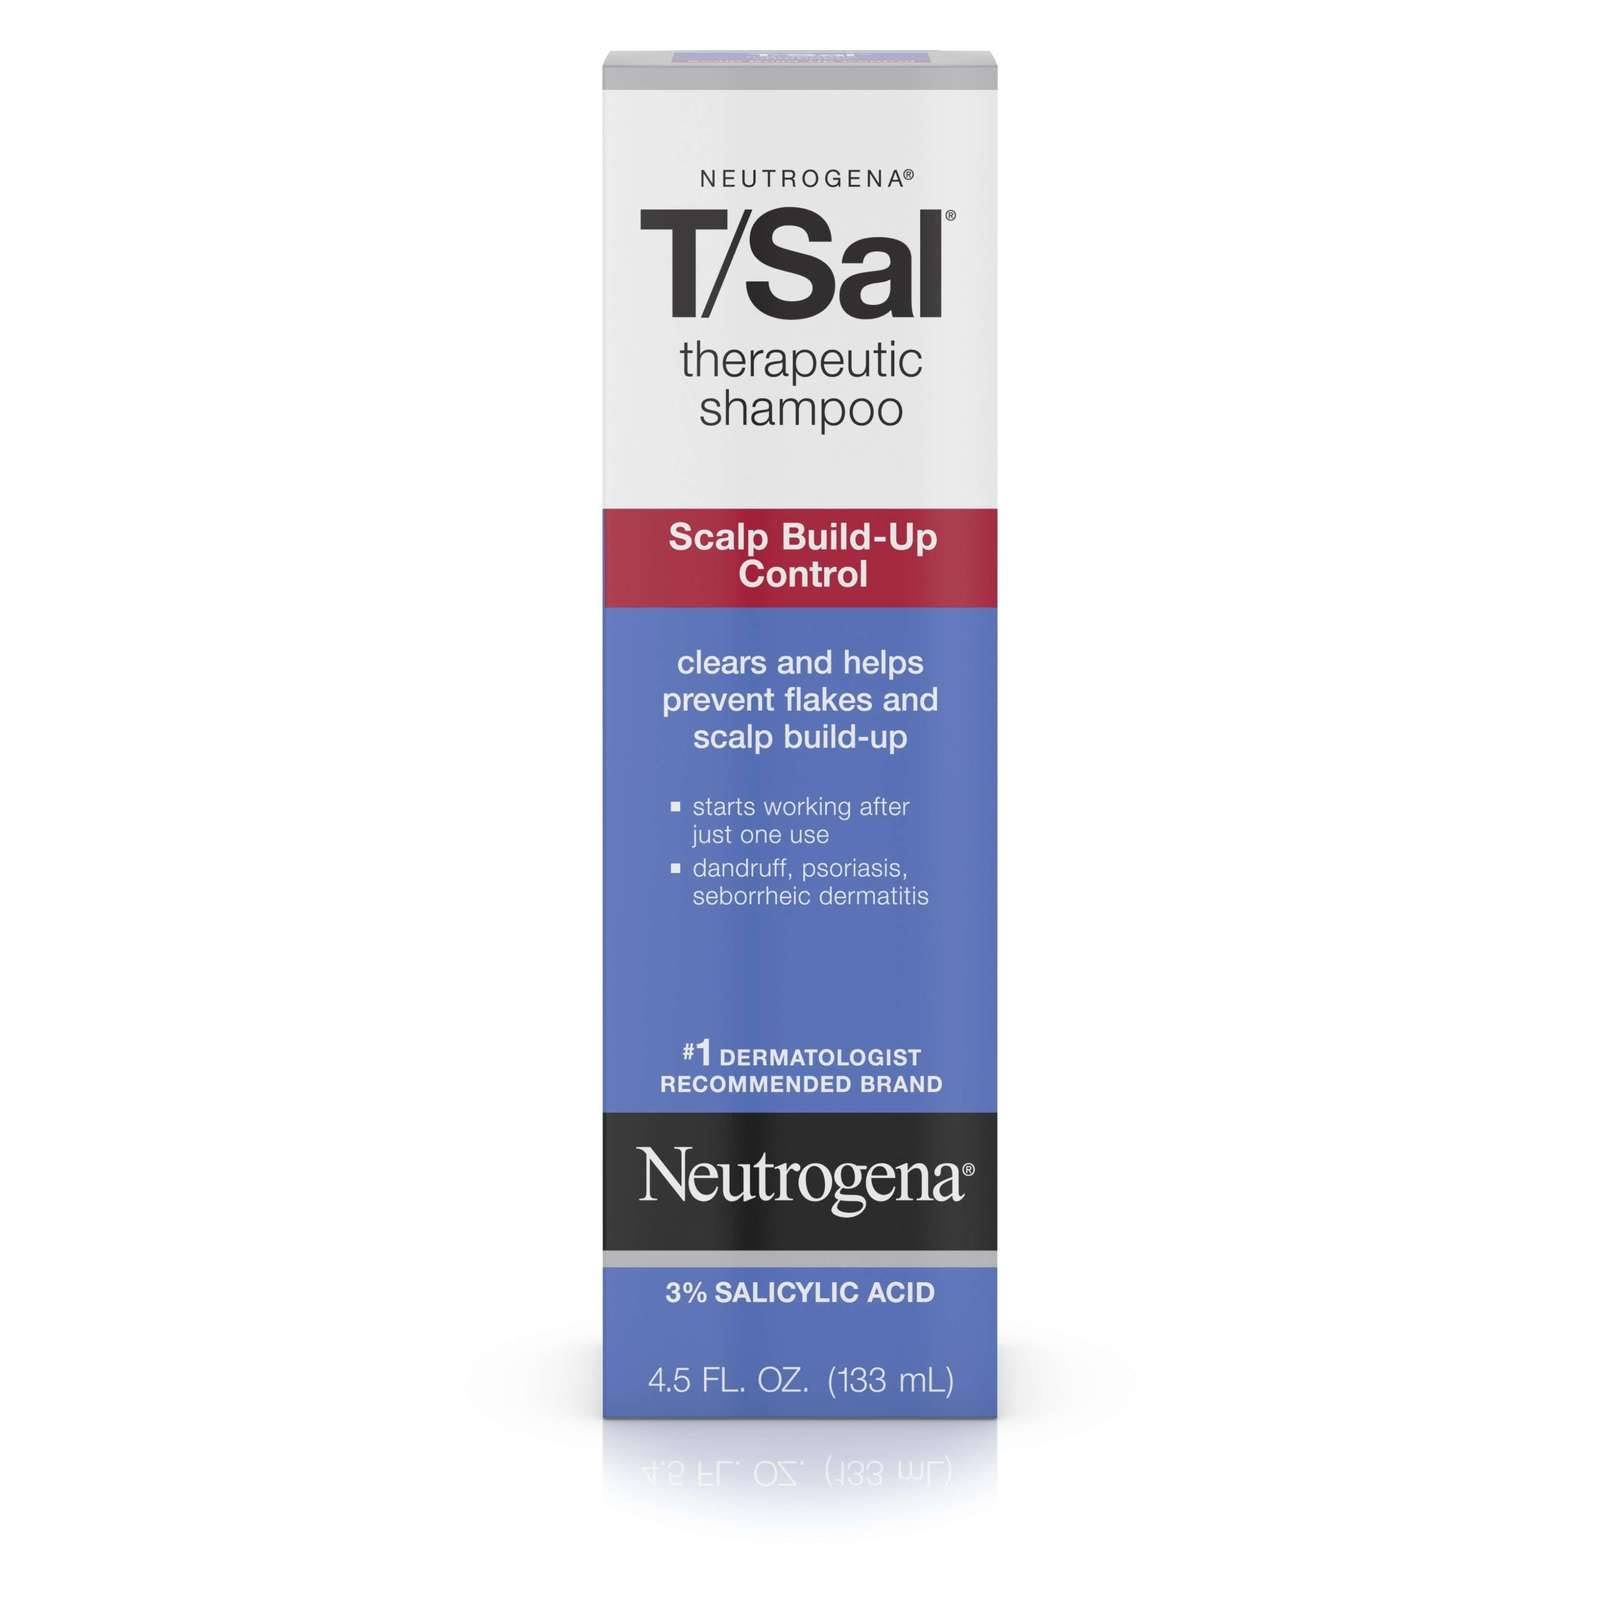 Neutrogena T/Sal Therapeutic Shampoo Scalp Build-Up Control - 133ml